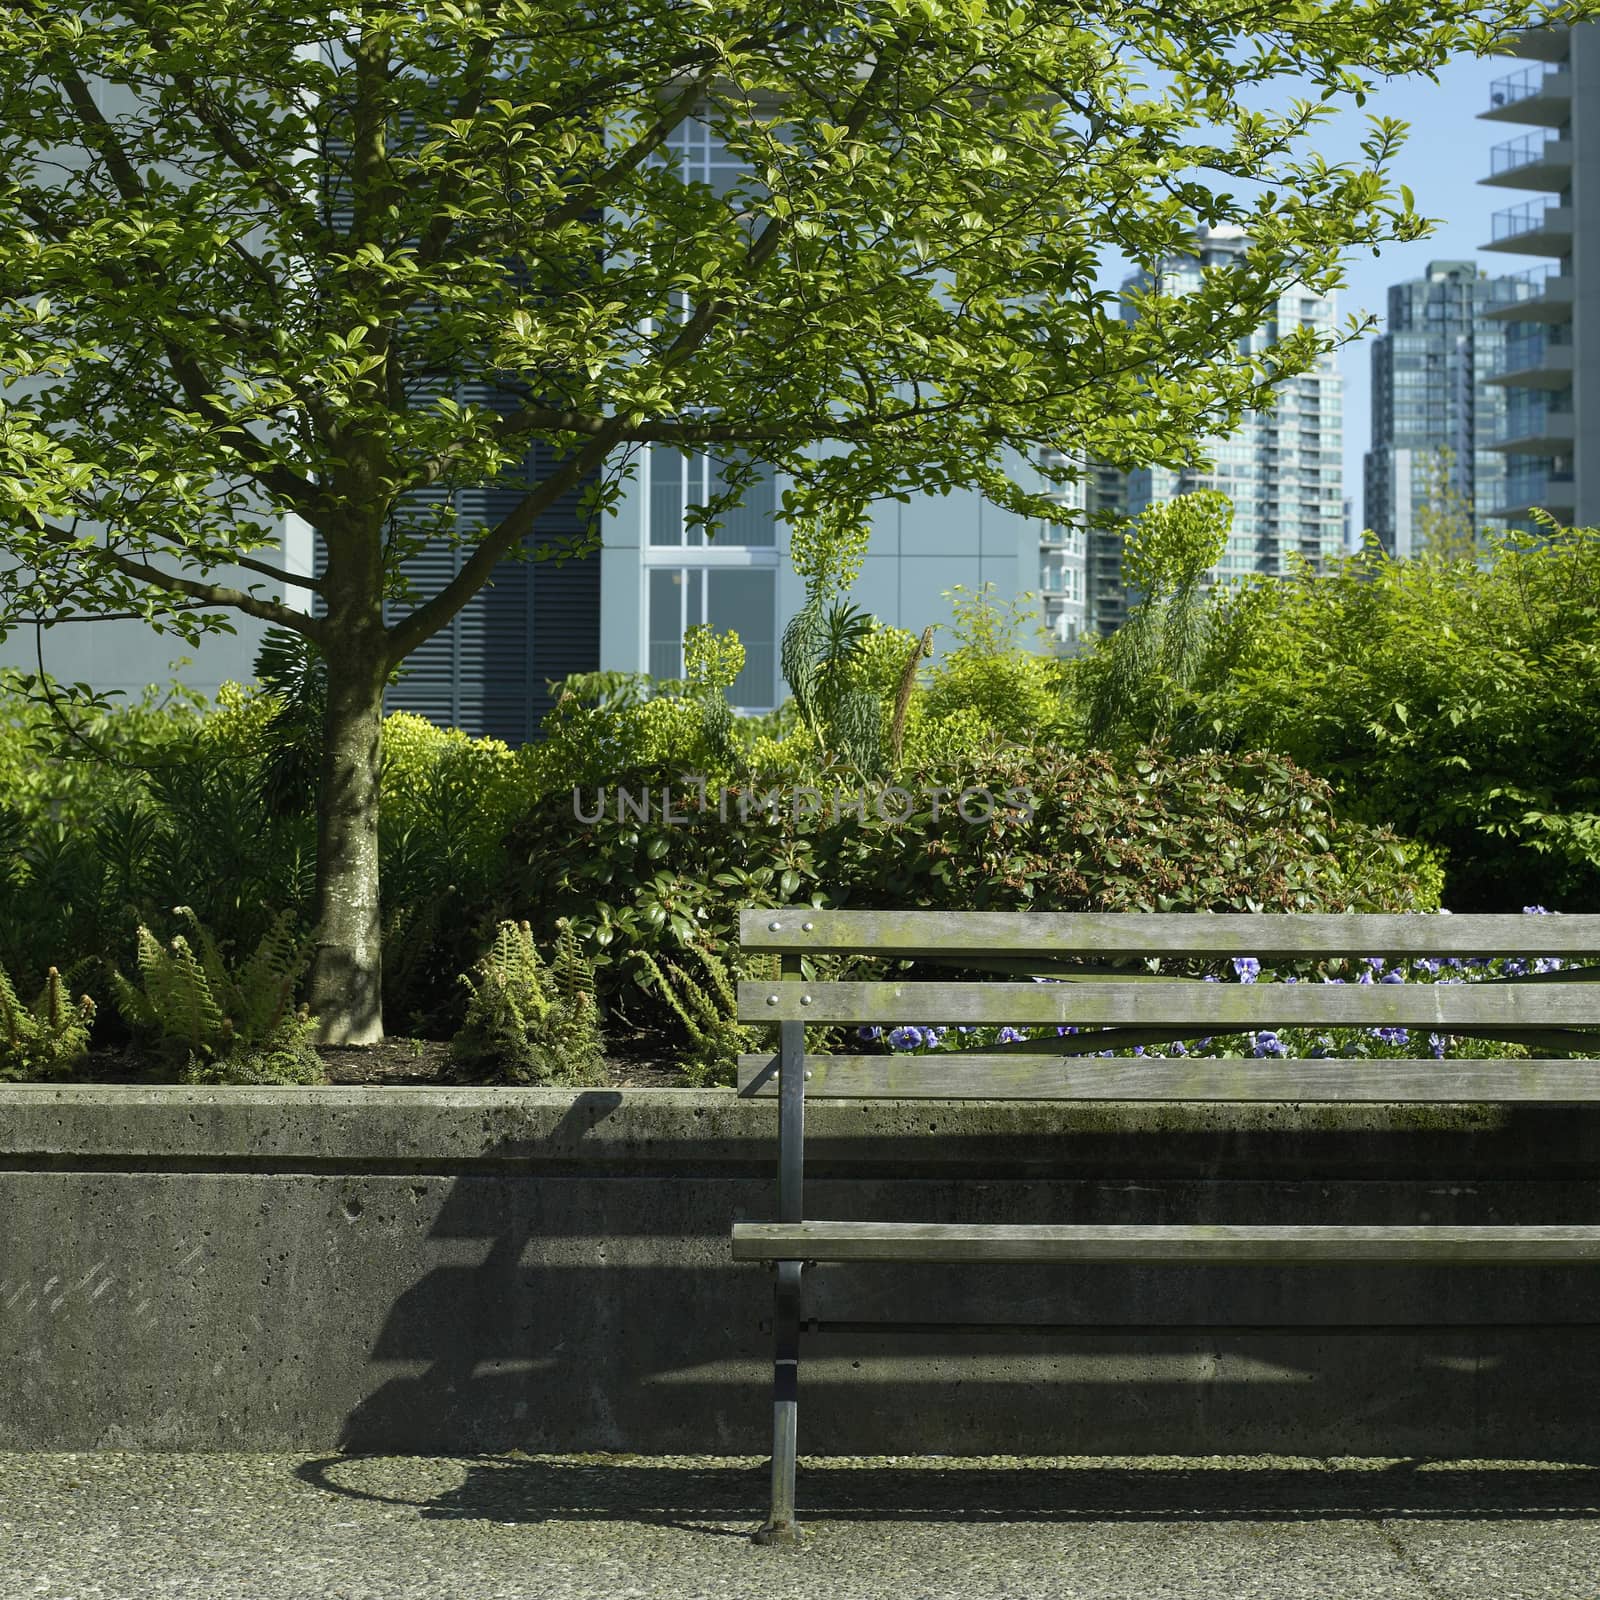 Urban Park Bench  by mmm